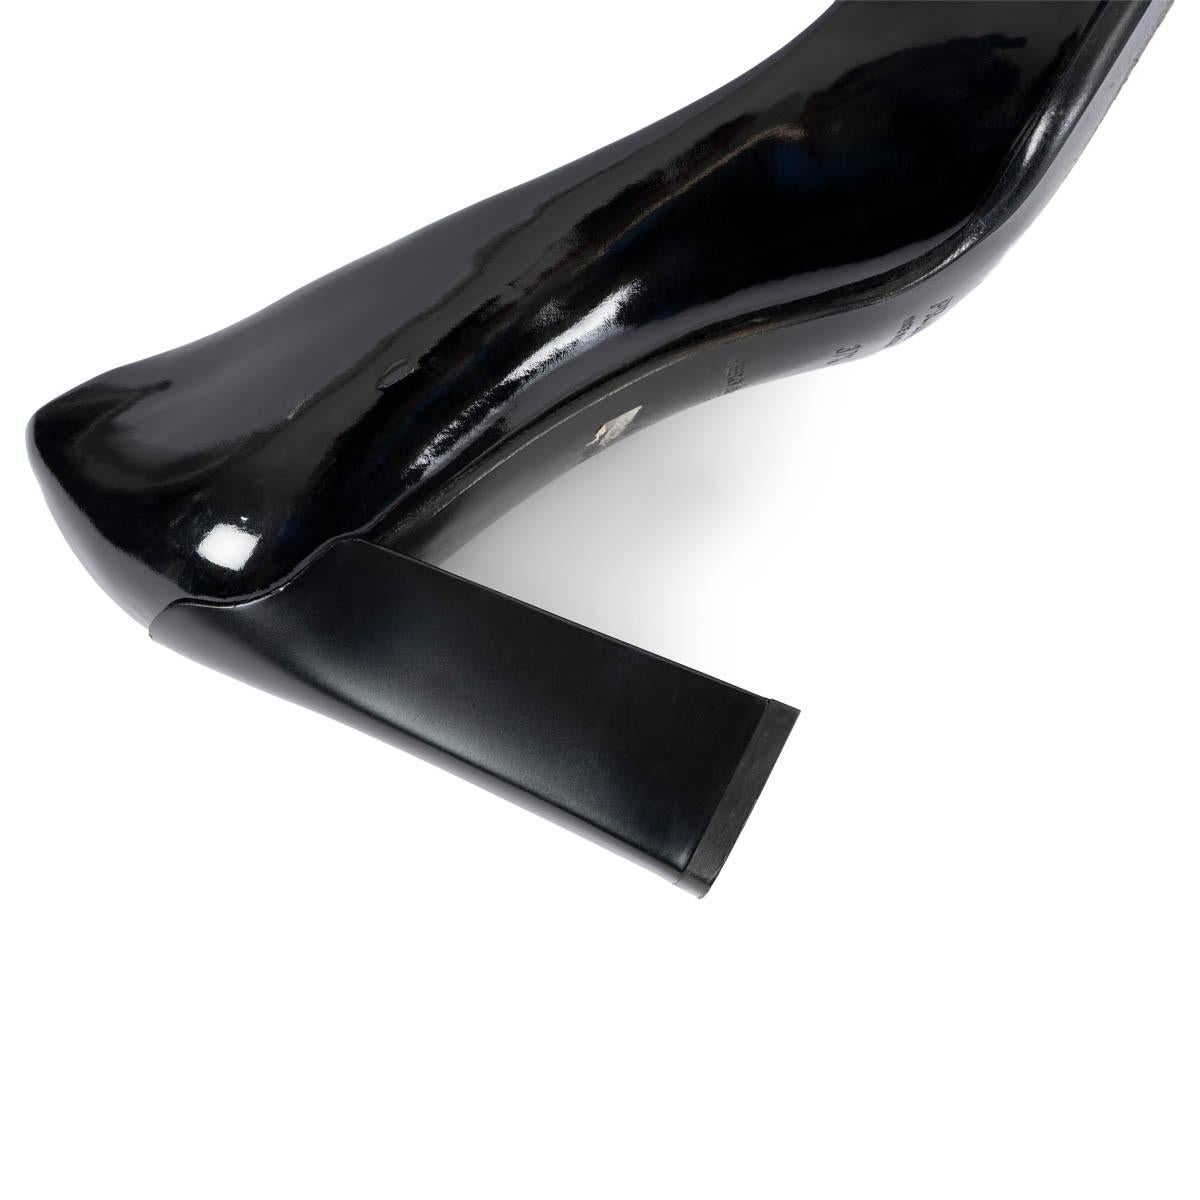 PRADA cuir verni noir VINTAGE Chaussures 37.5 3